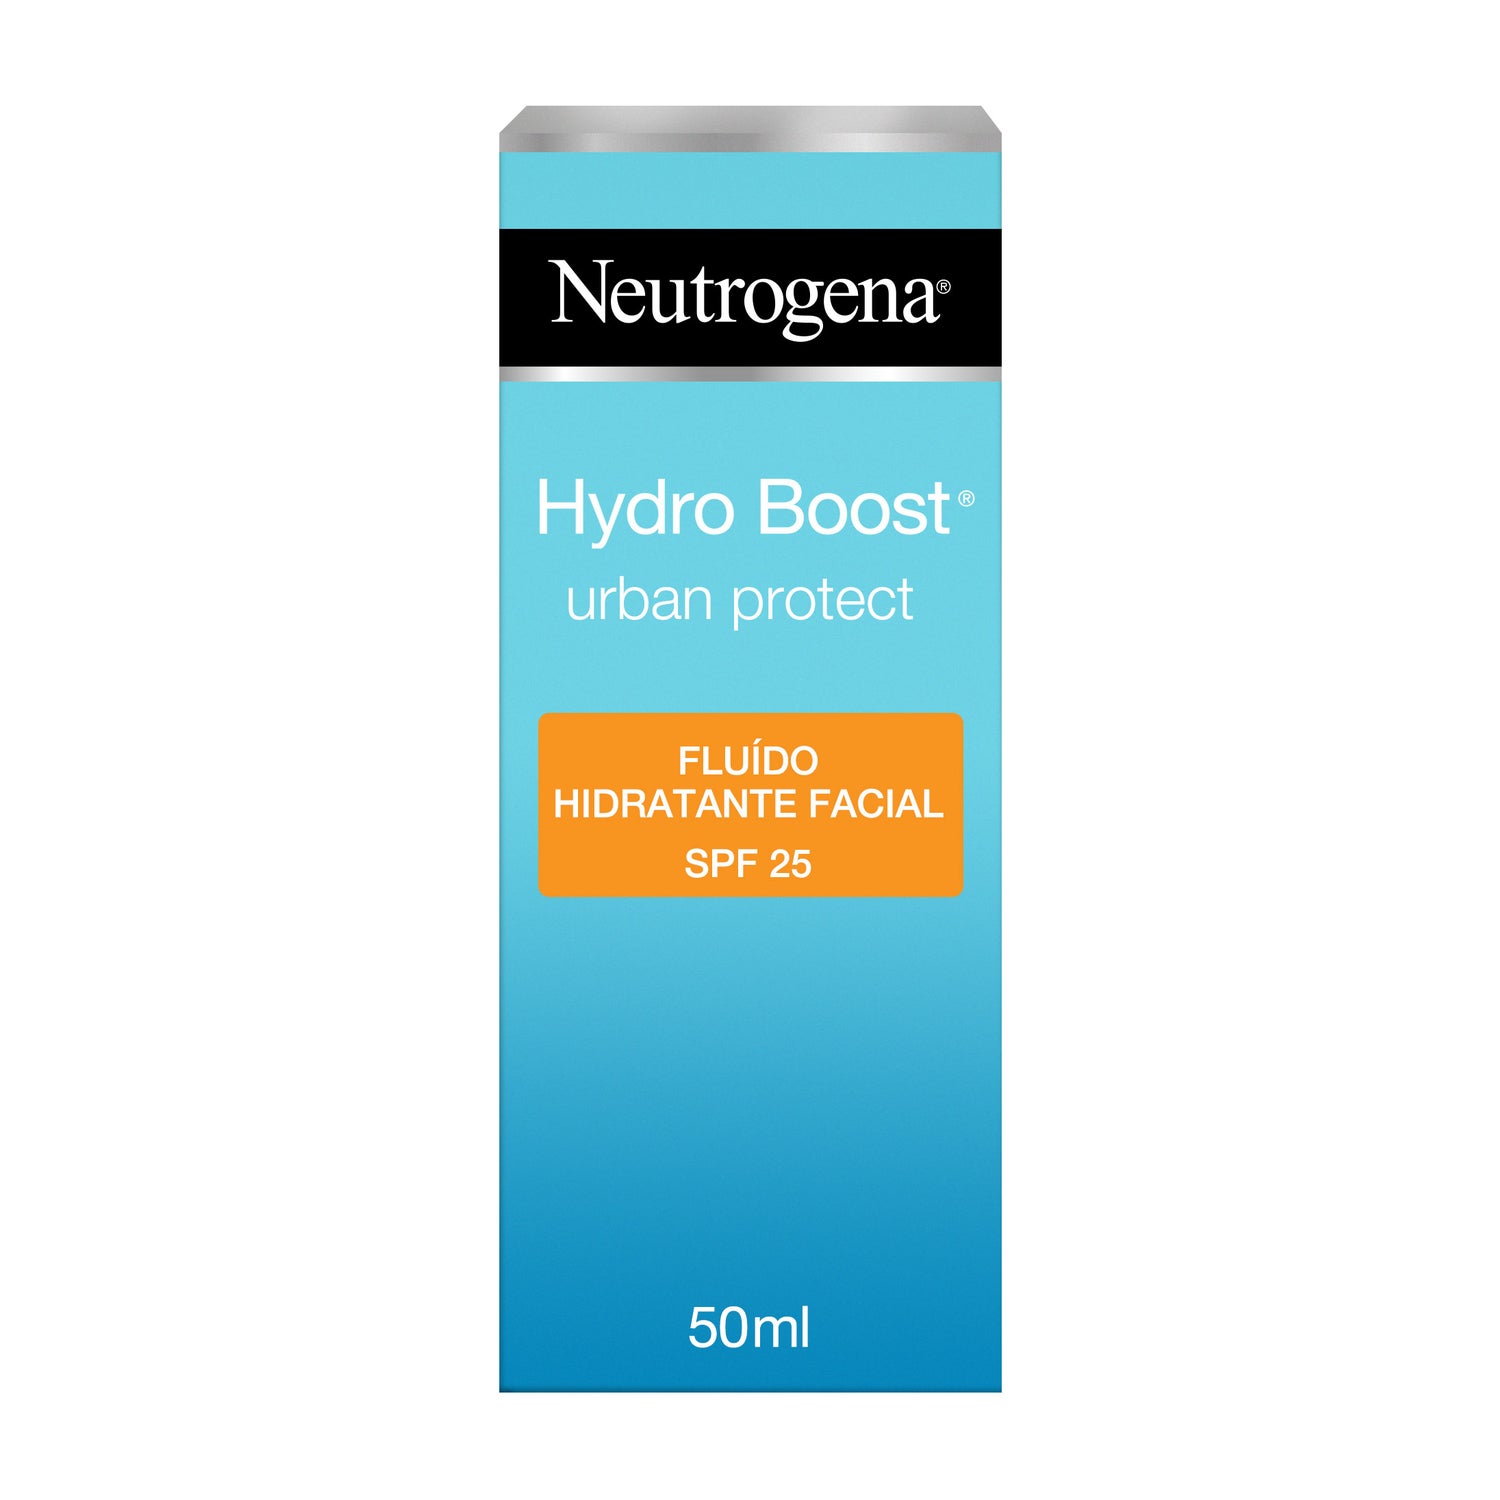 neutrogena hydro boost urban protect hidratante facial fluido spf 25 50ml